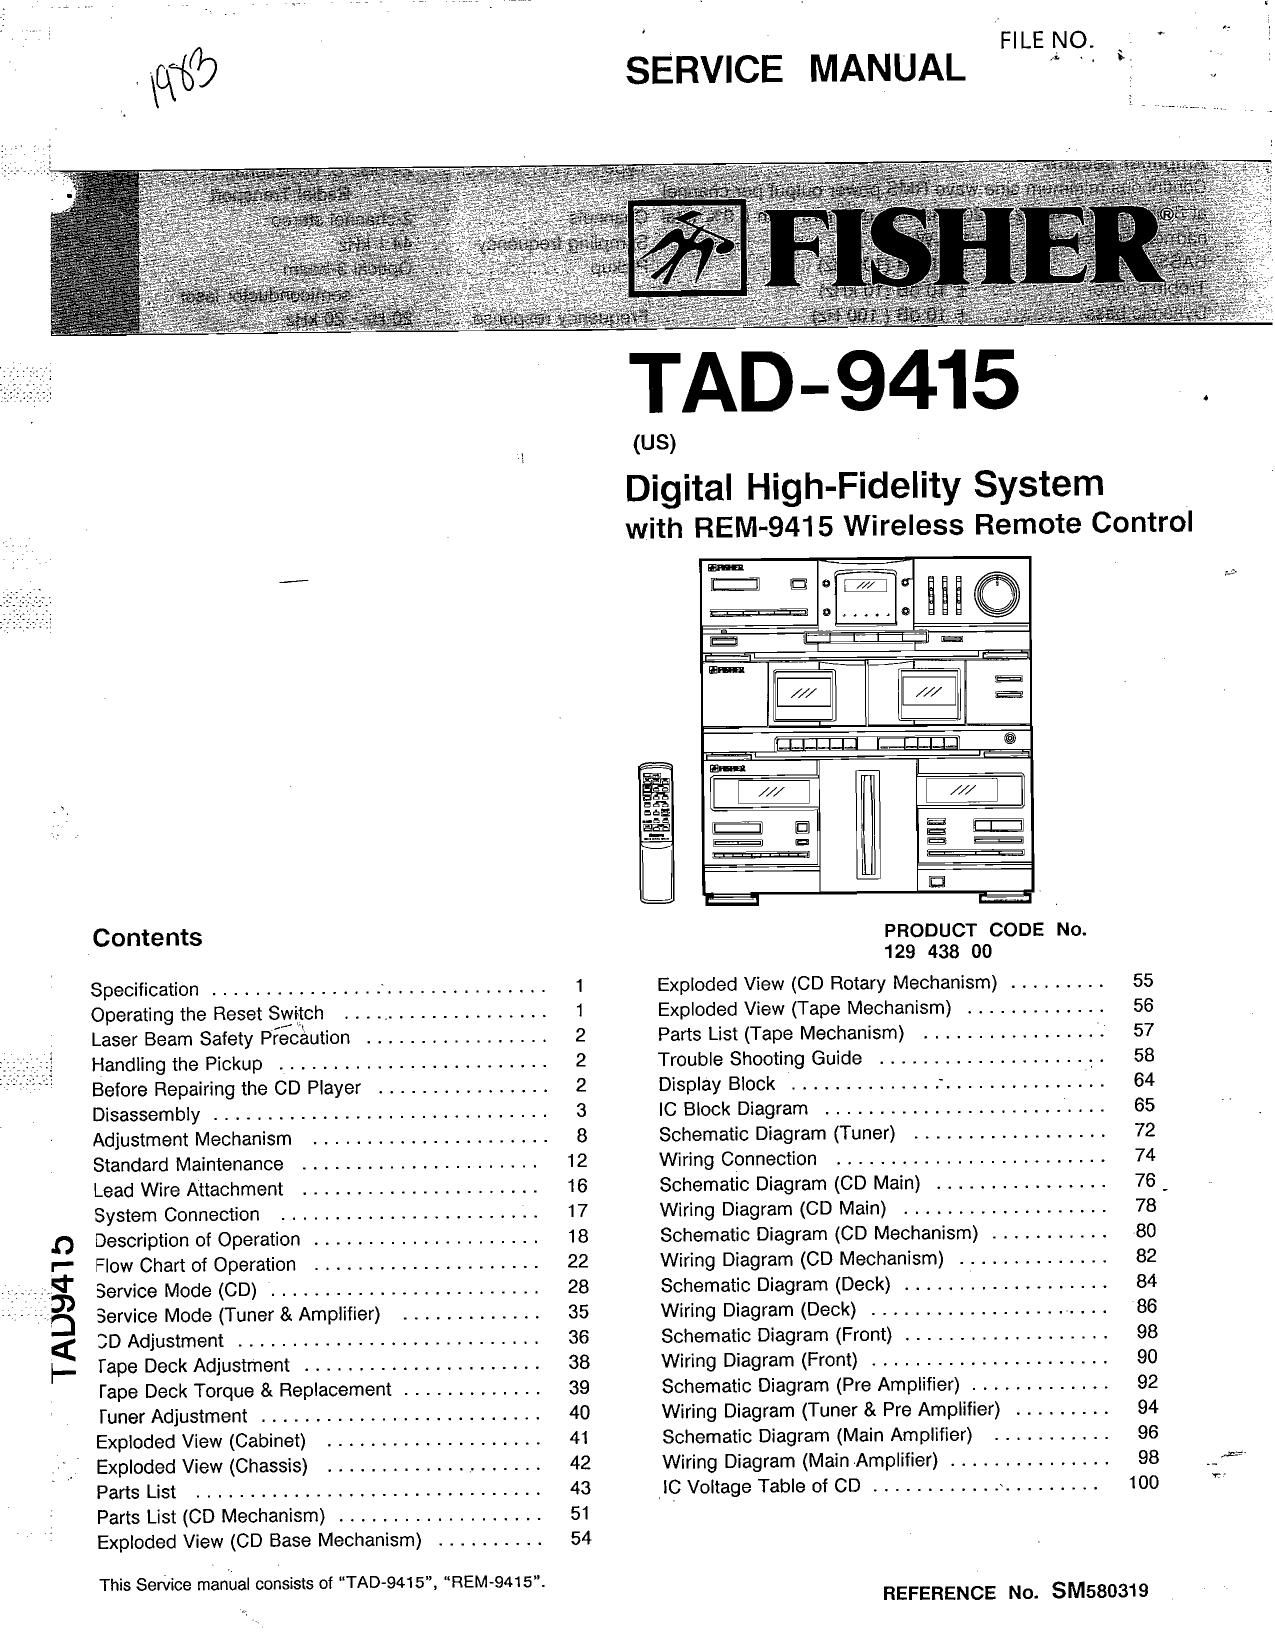 Fisher TAD 9415 Service Manual